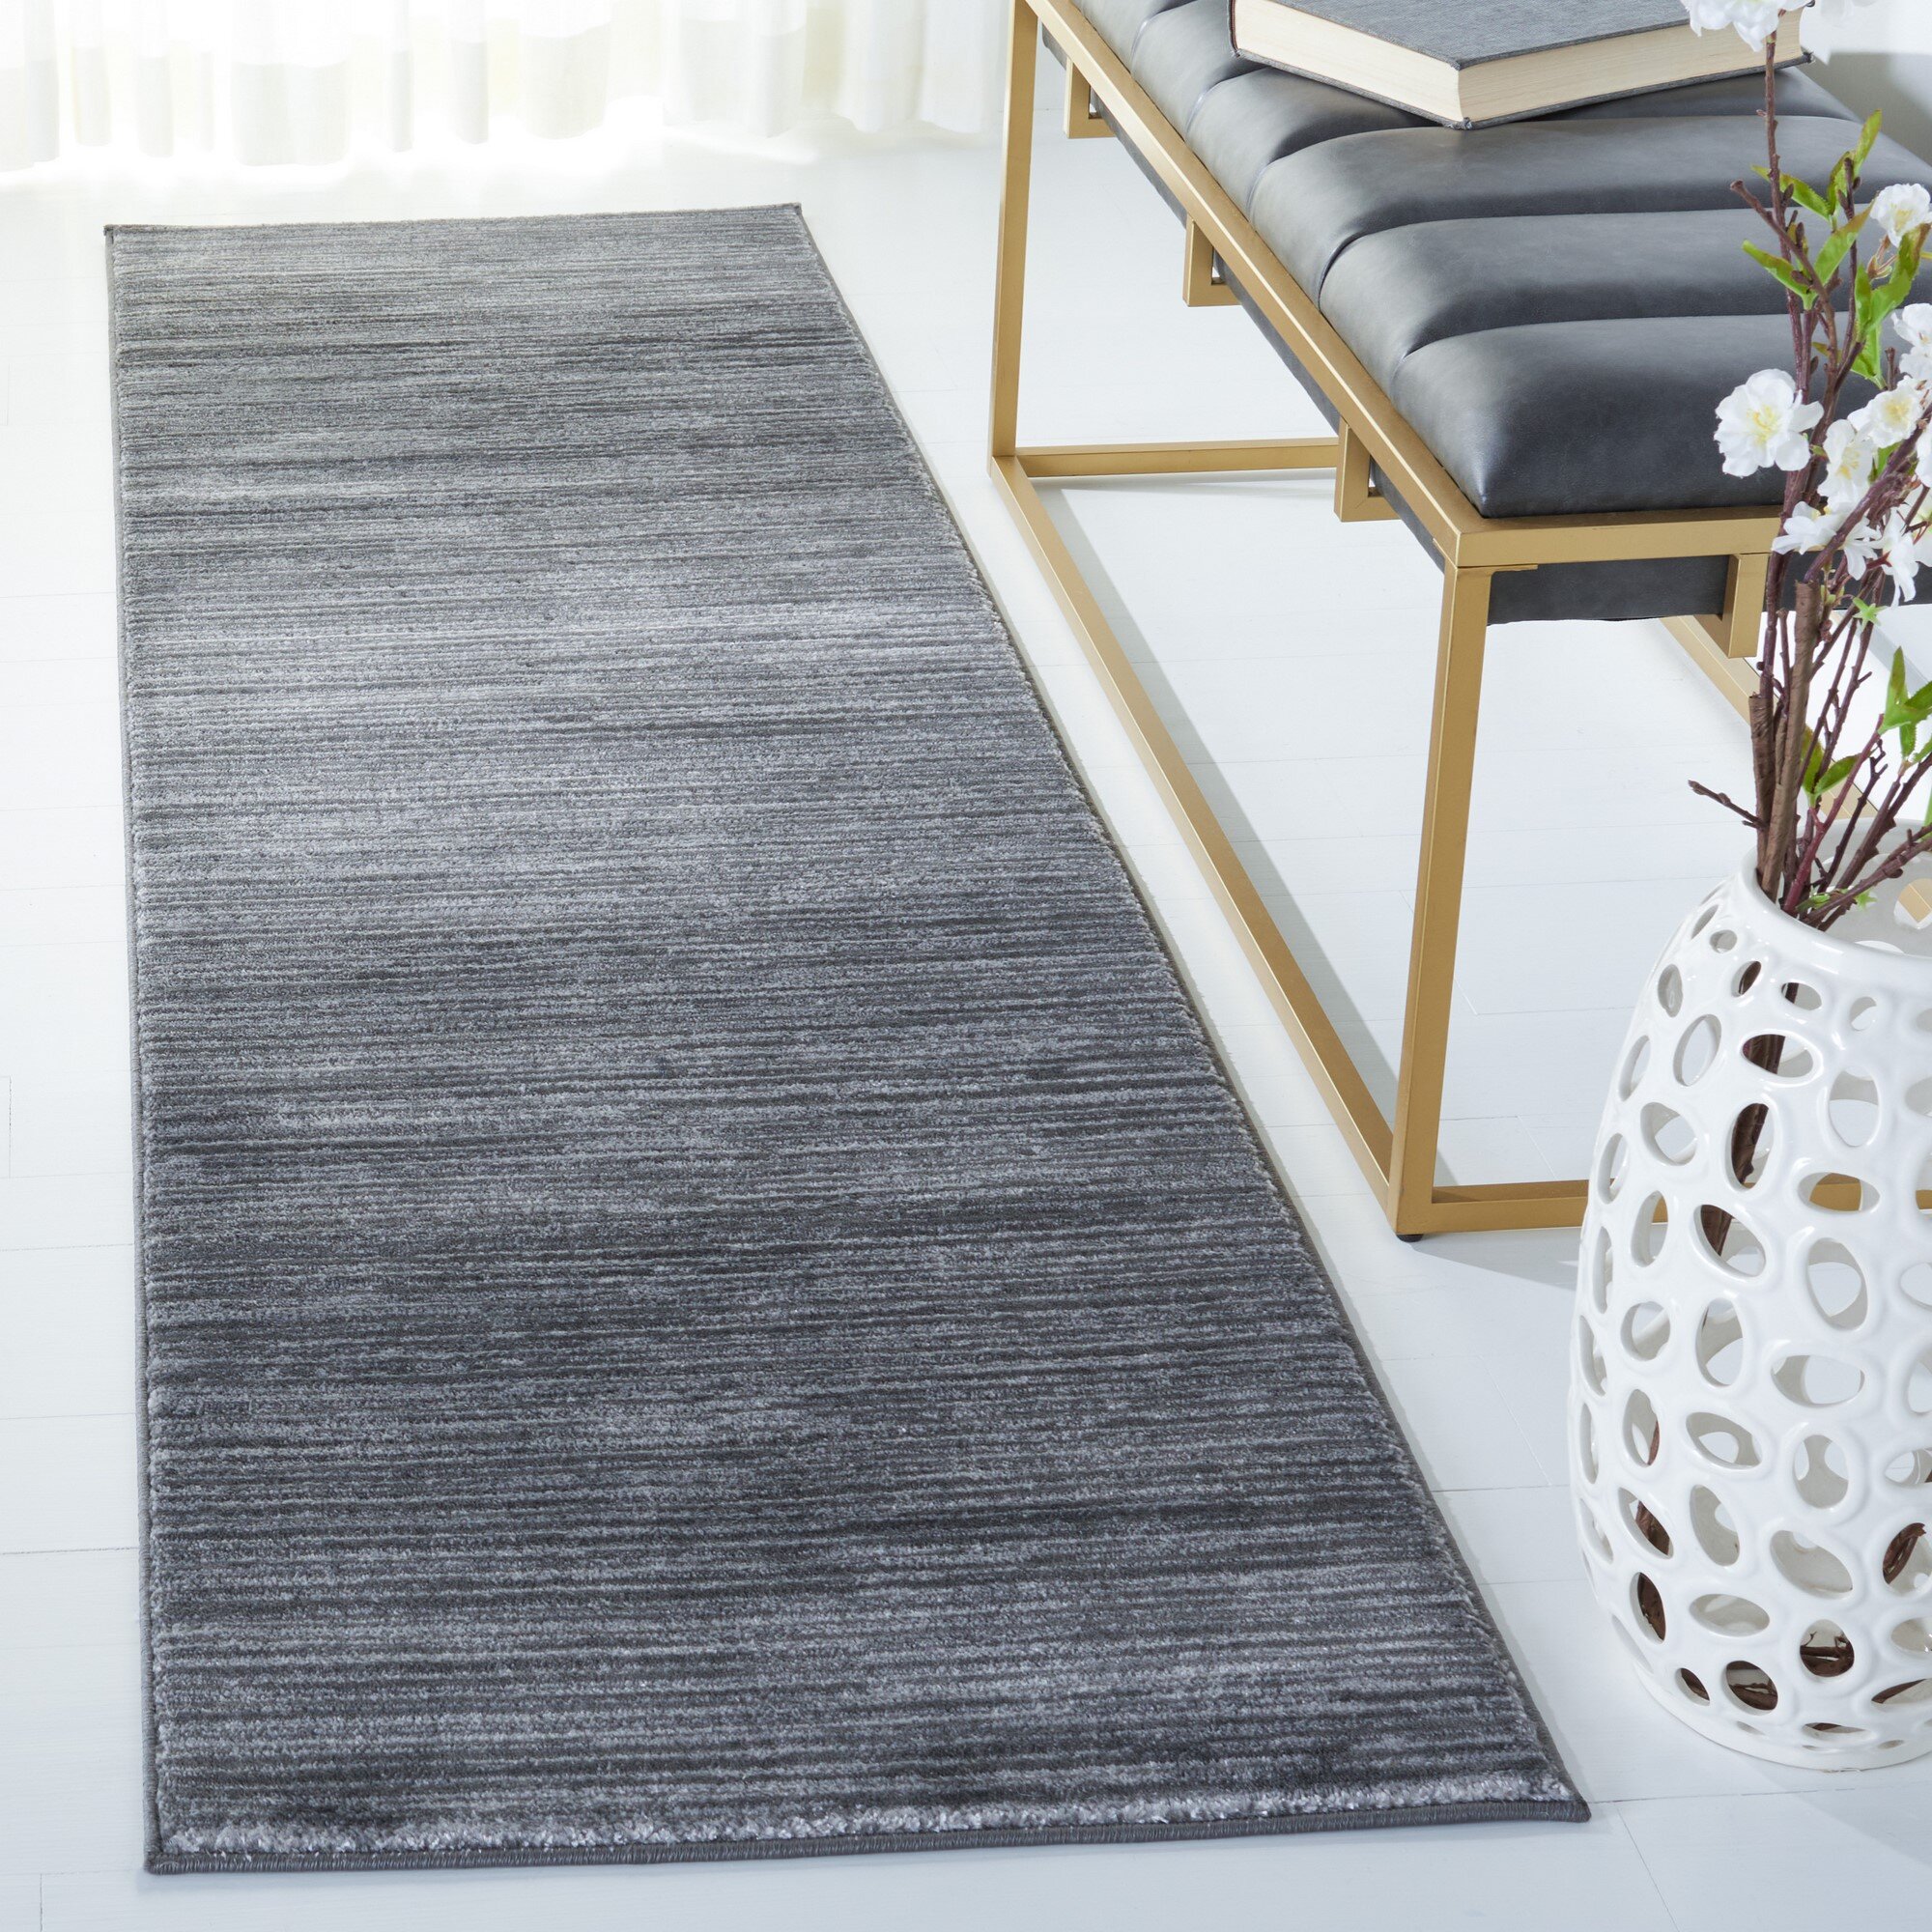 Black Grey Silver Large Rugs For Living Room Bedroom Carpet Hallway Runner Rug 